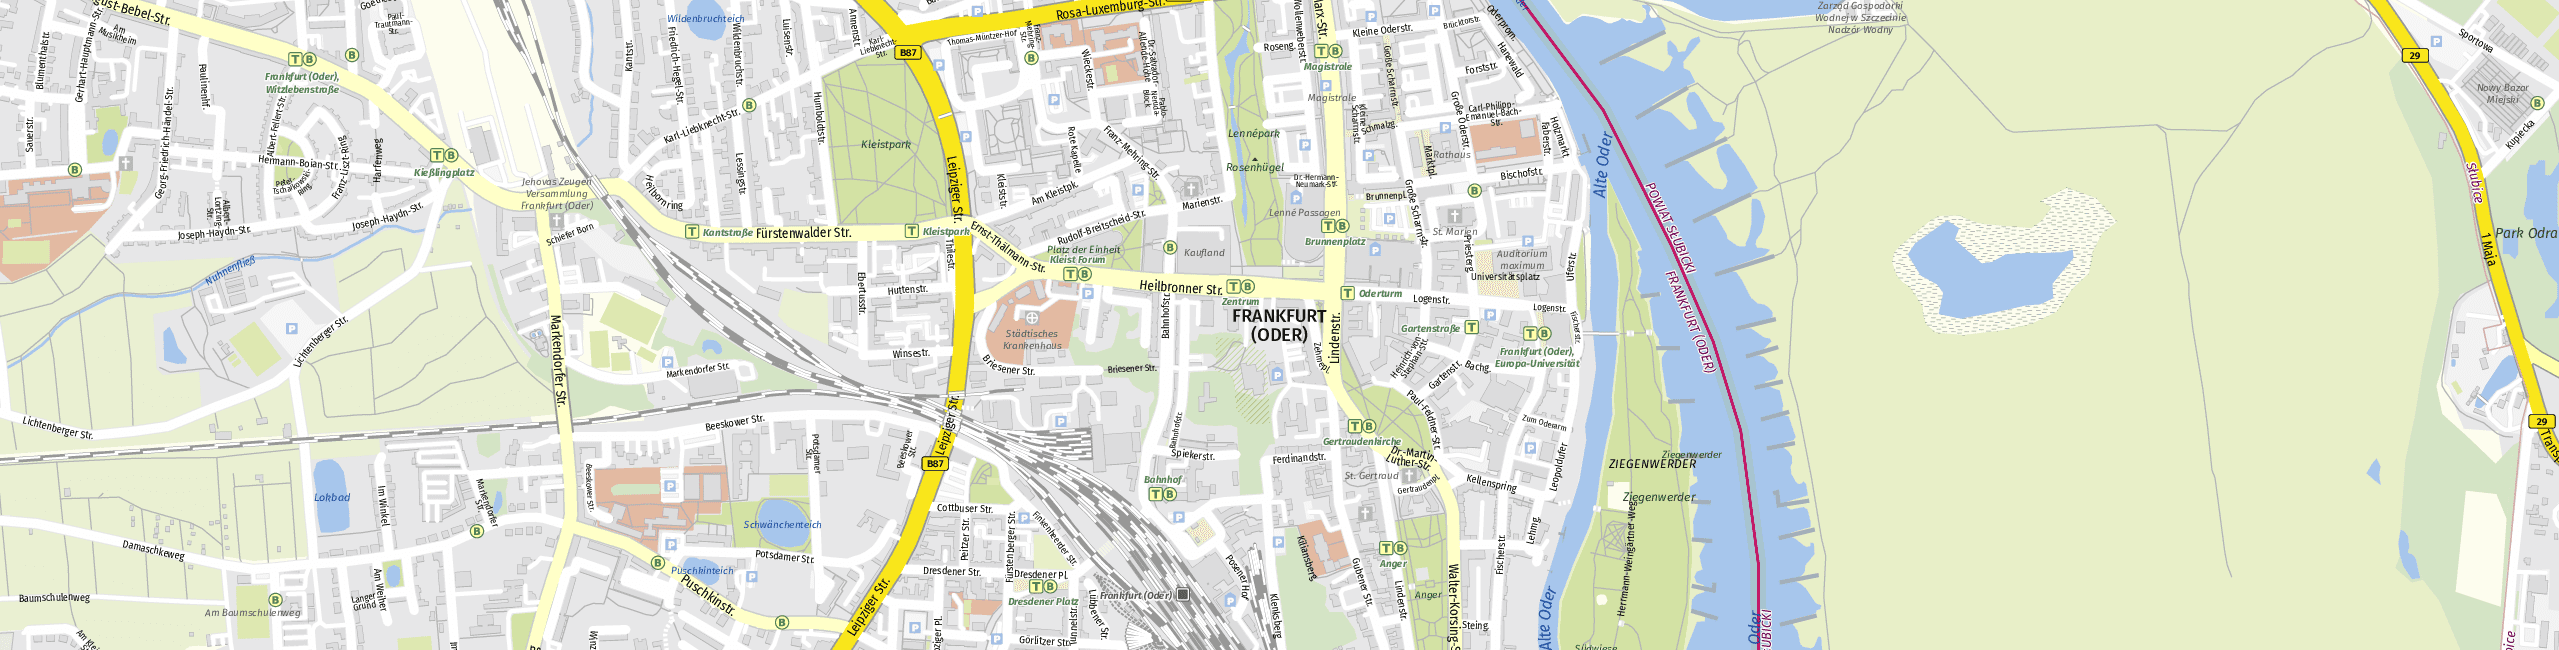 Stadtplan Frankfurt (Oder) zum Downloaden.